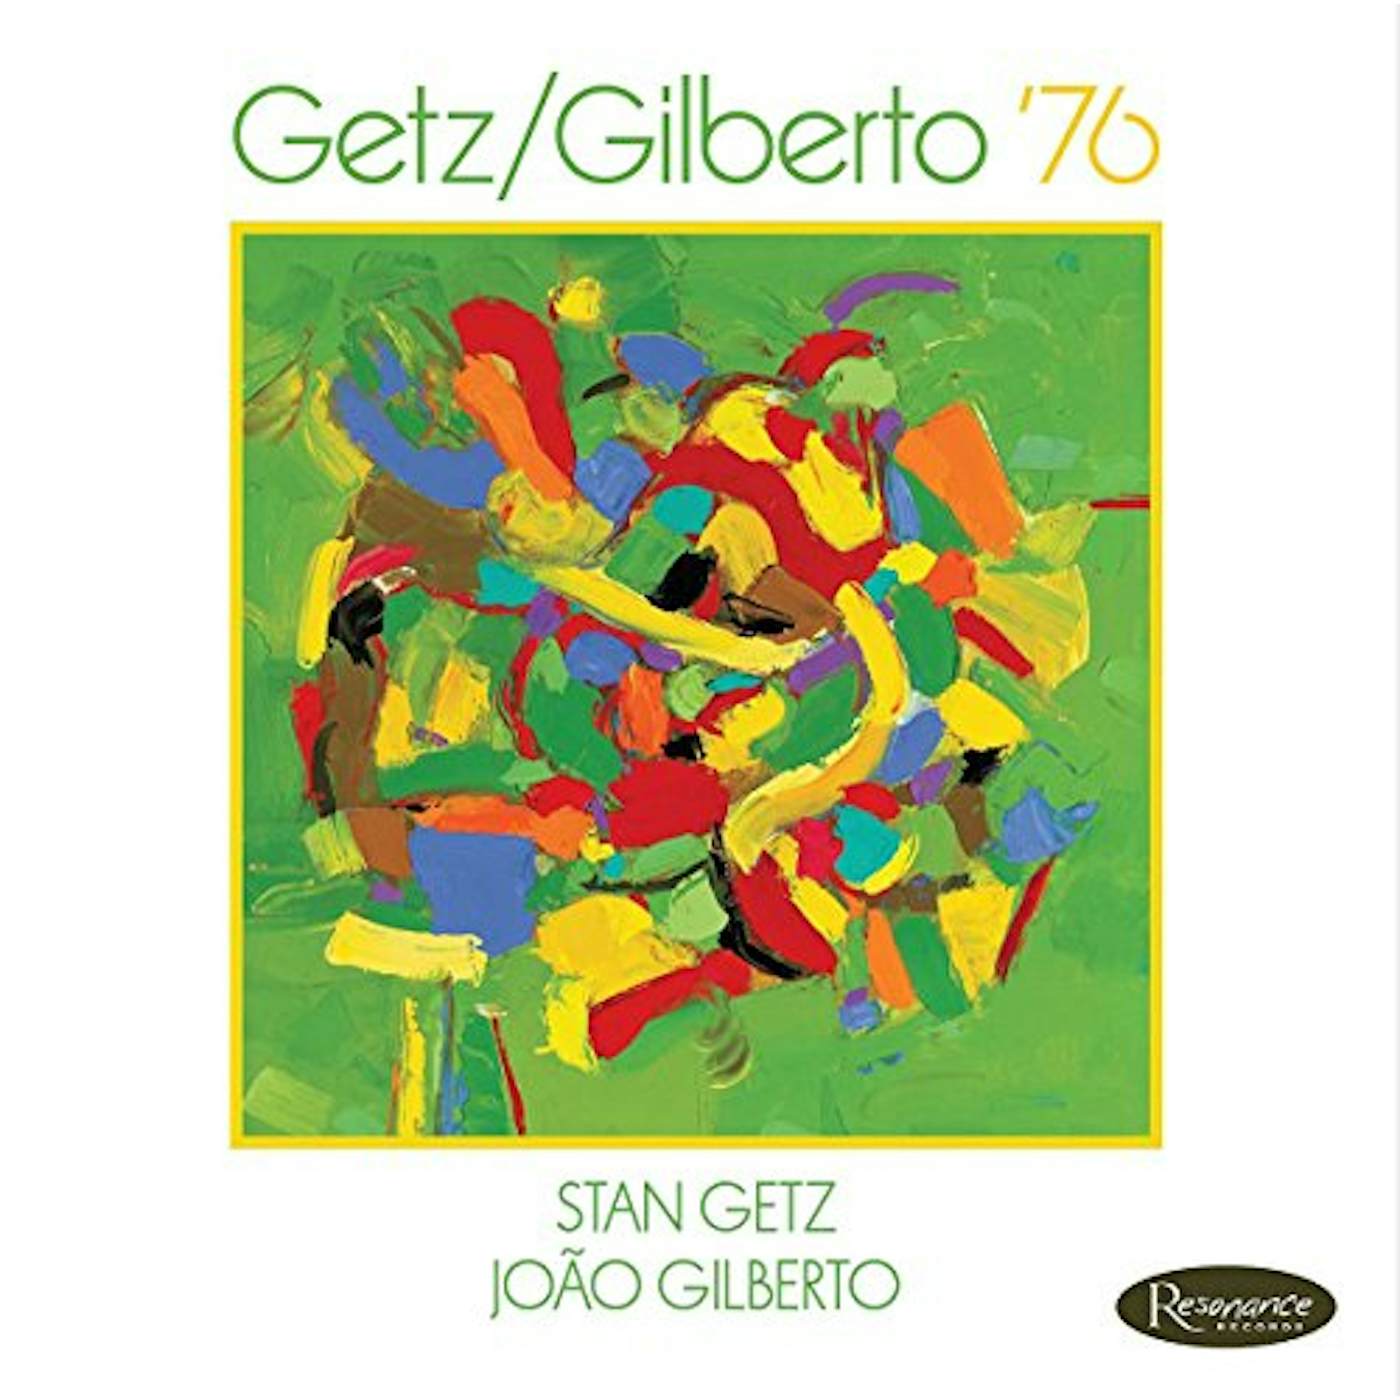 Stan Getz & Joao Gilberto BETZ/GILBERTO 76 CD